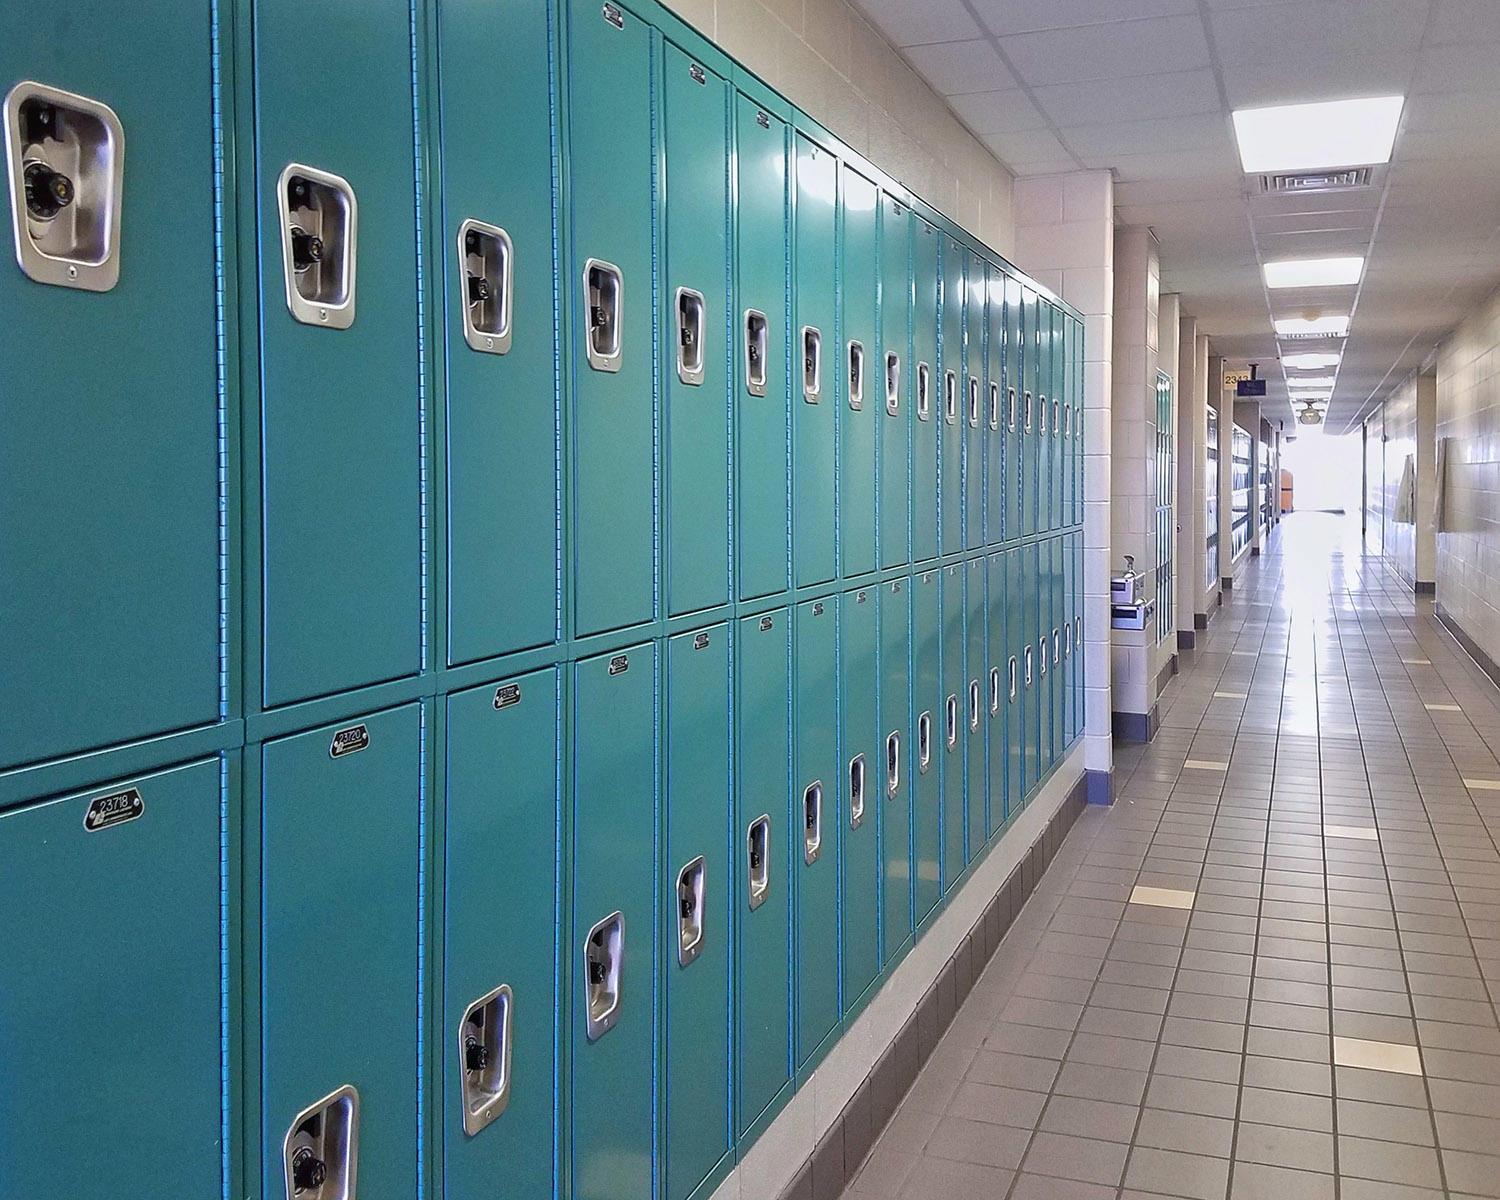 lockers along school hallway